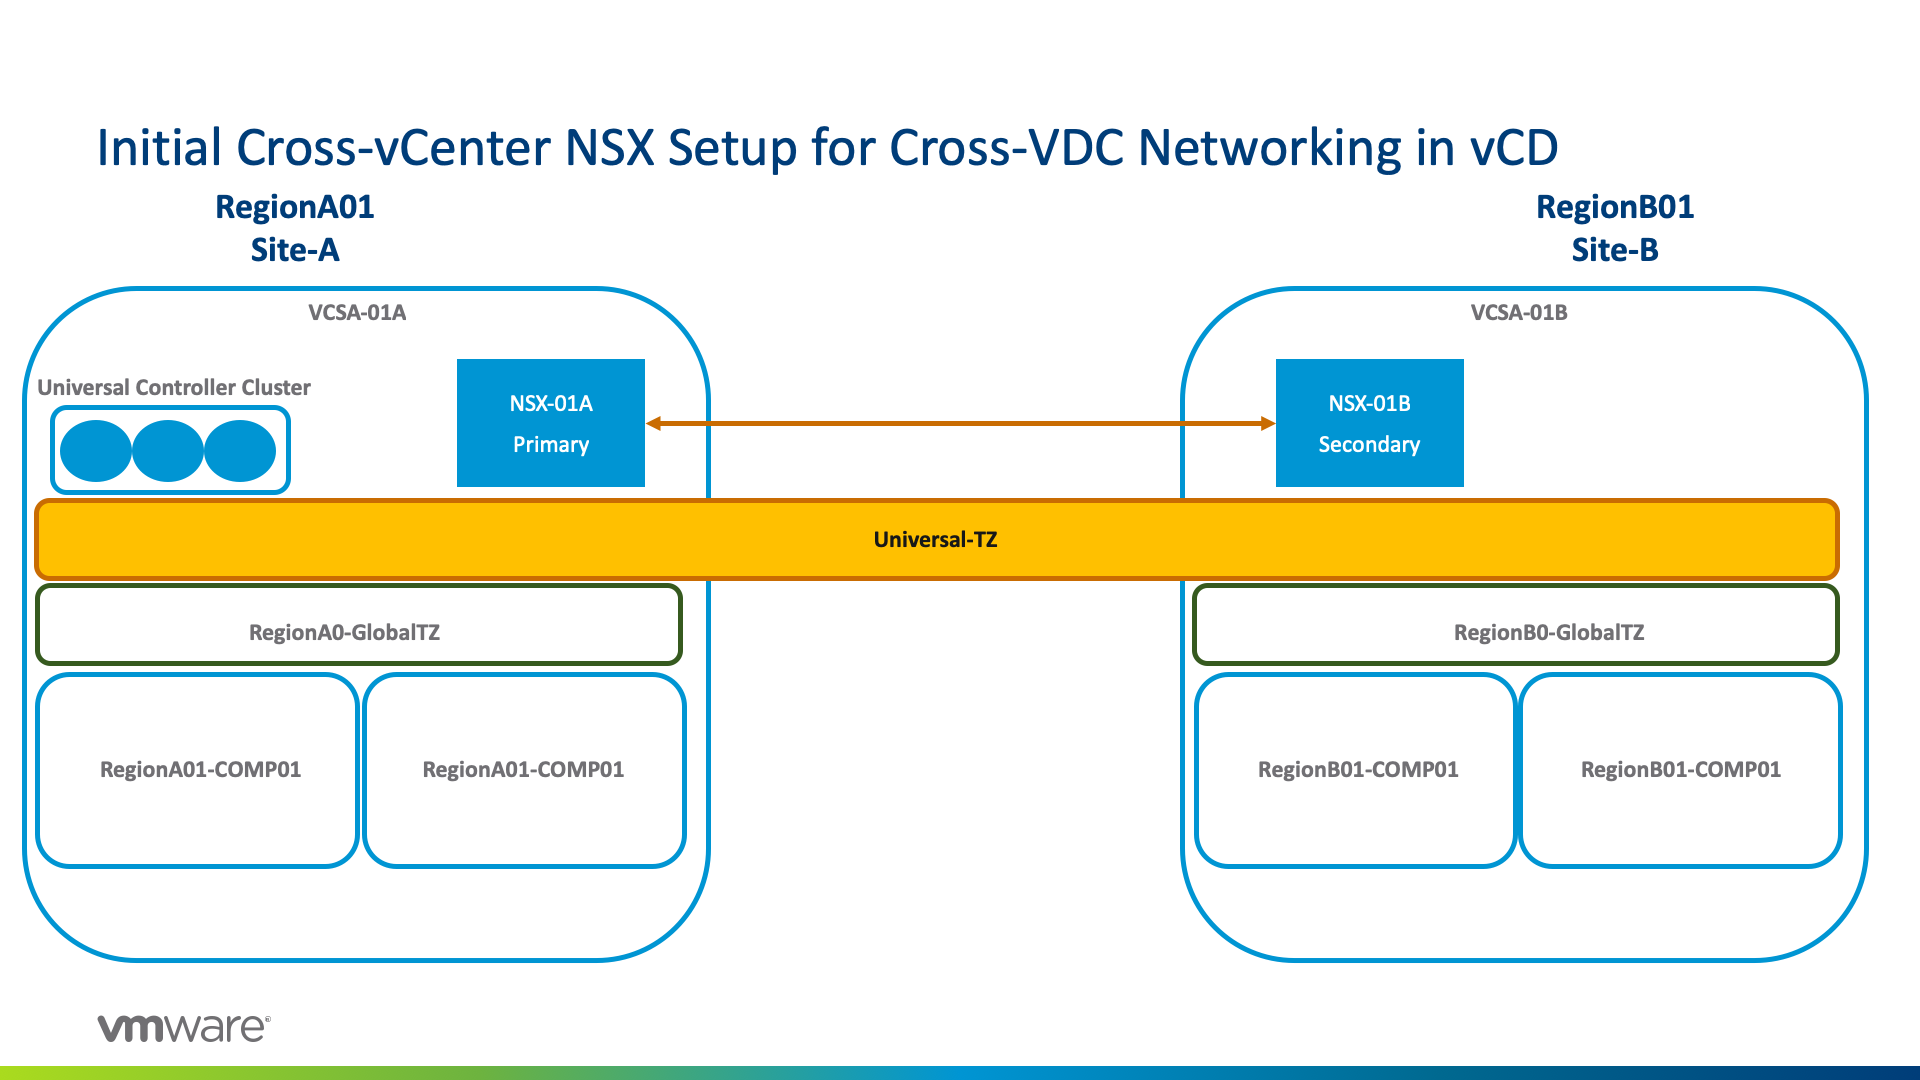 Initial cross-vCenter NSX setup for cross-VDC networking in vCloud Director